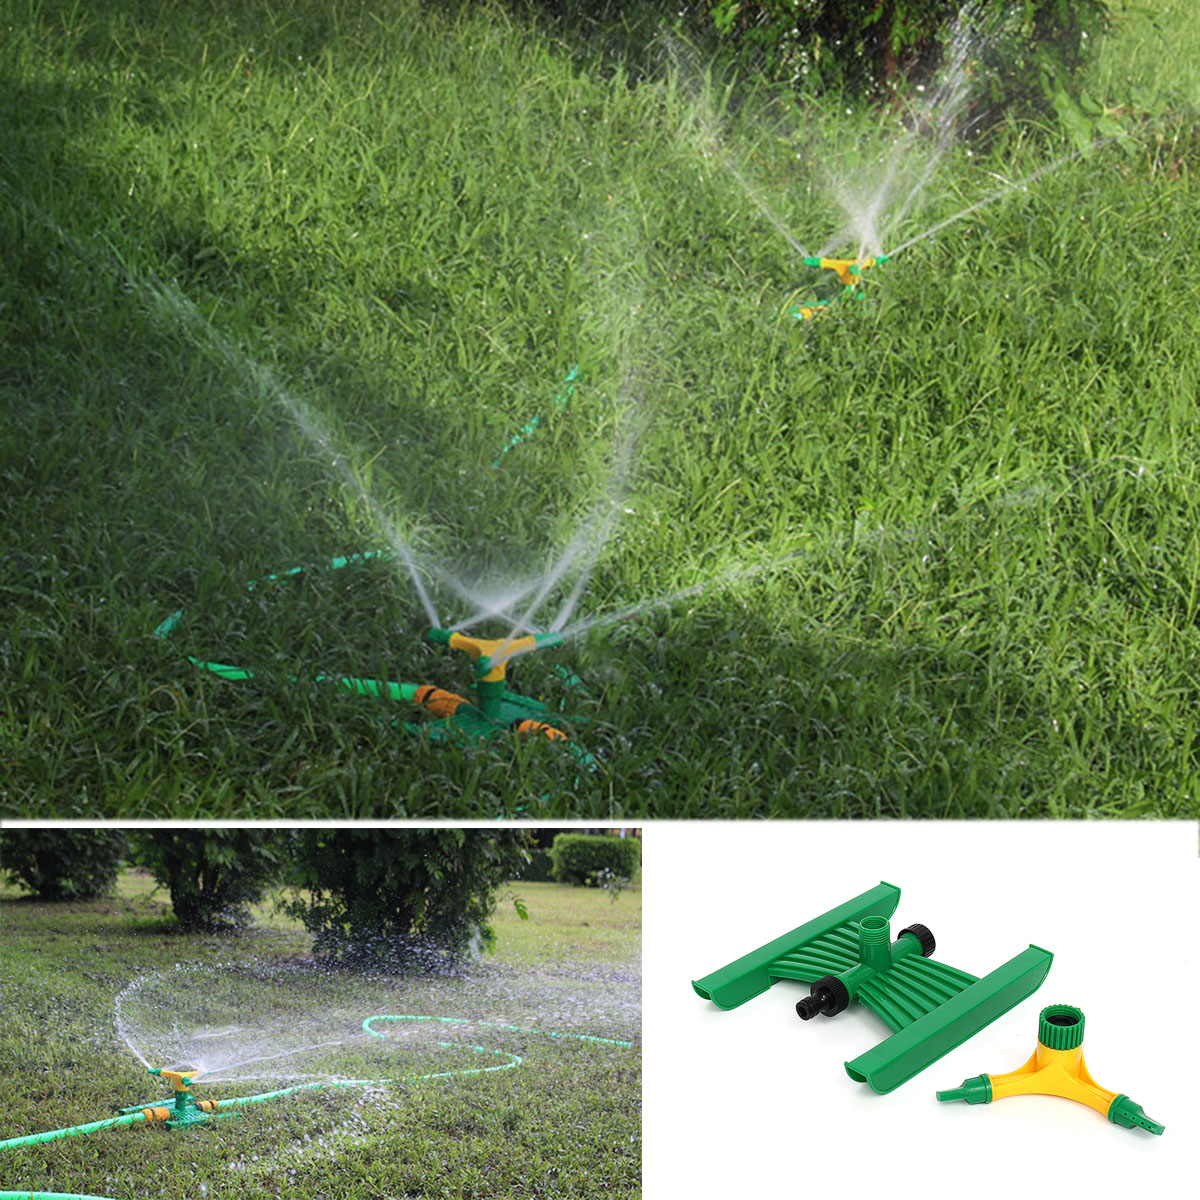 Rotating-Impulse-Sprinkler-Garden-Lawn-Grass-Watering-System-Water-Hose-Sprayer-1478934-2